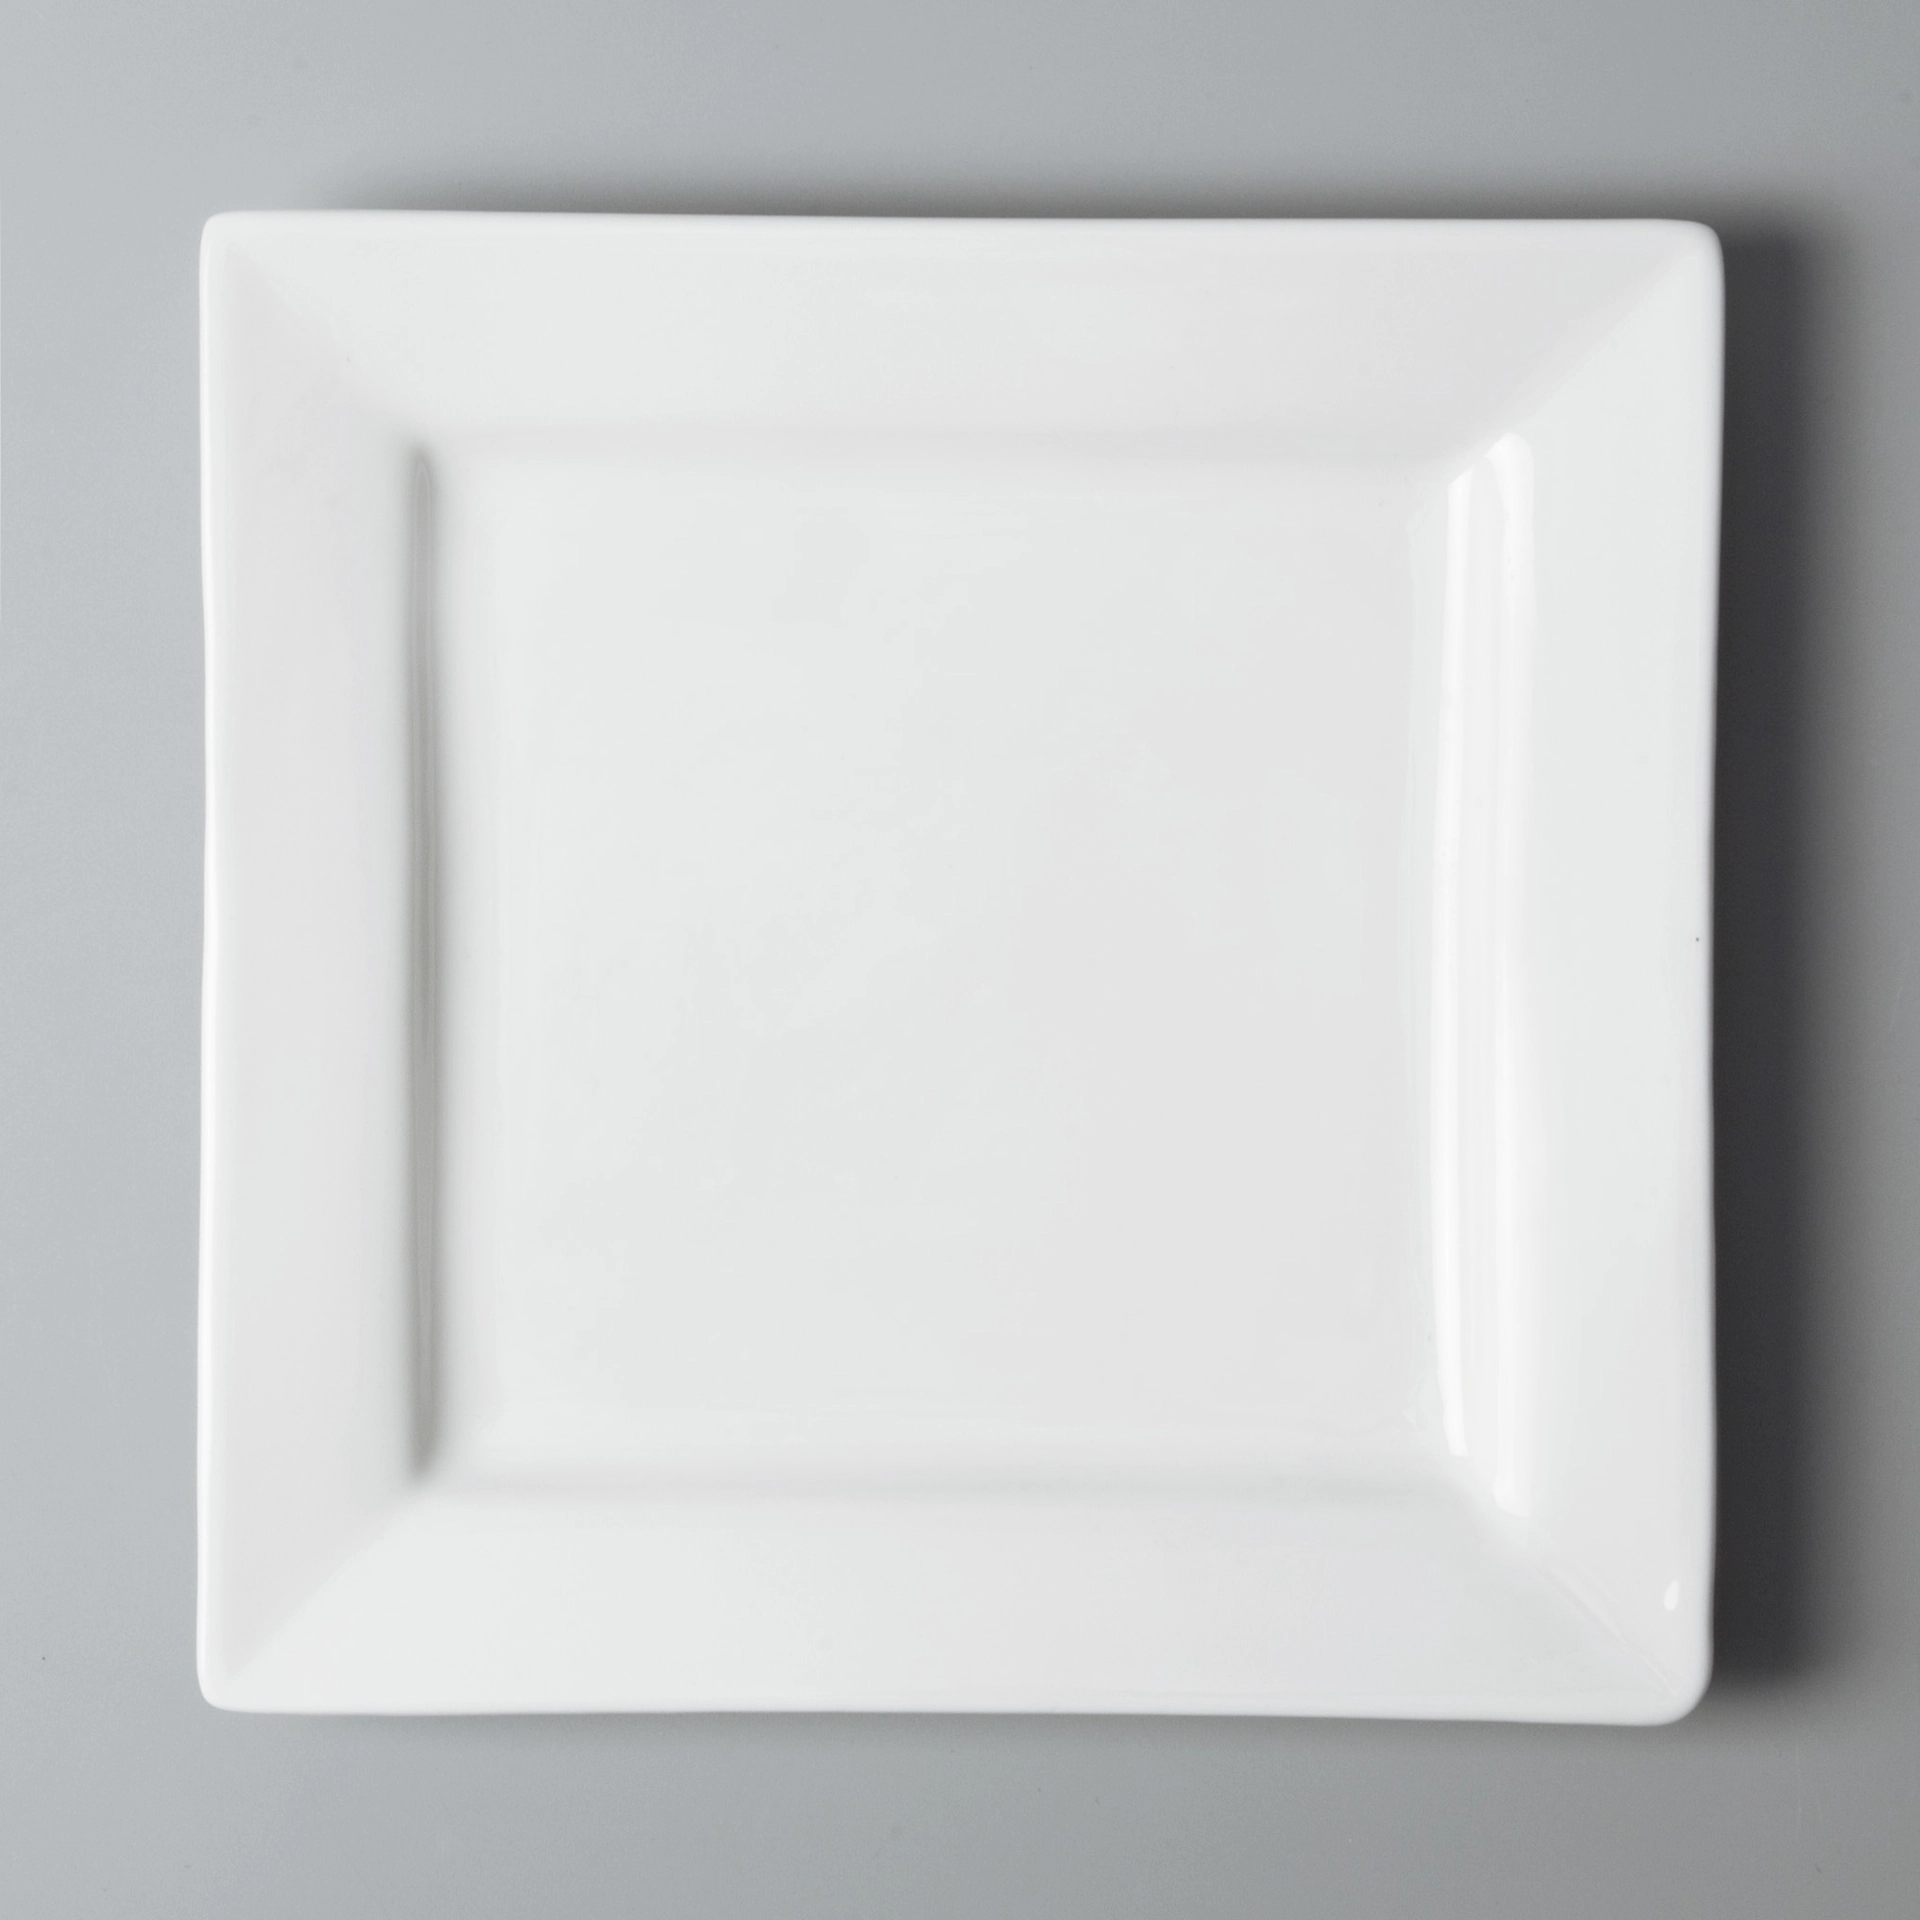 hot china wholesale ceramic plate restaurant dinnerware pasta square shape plates